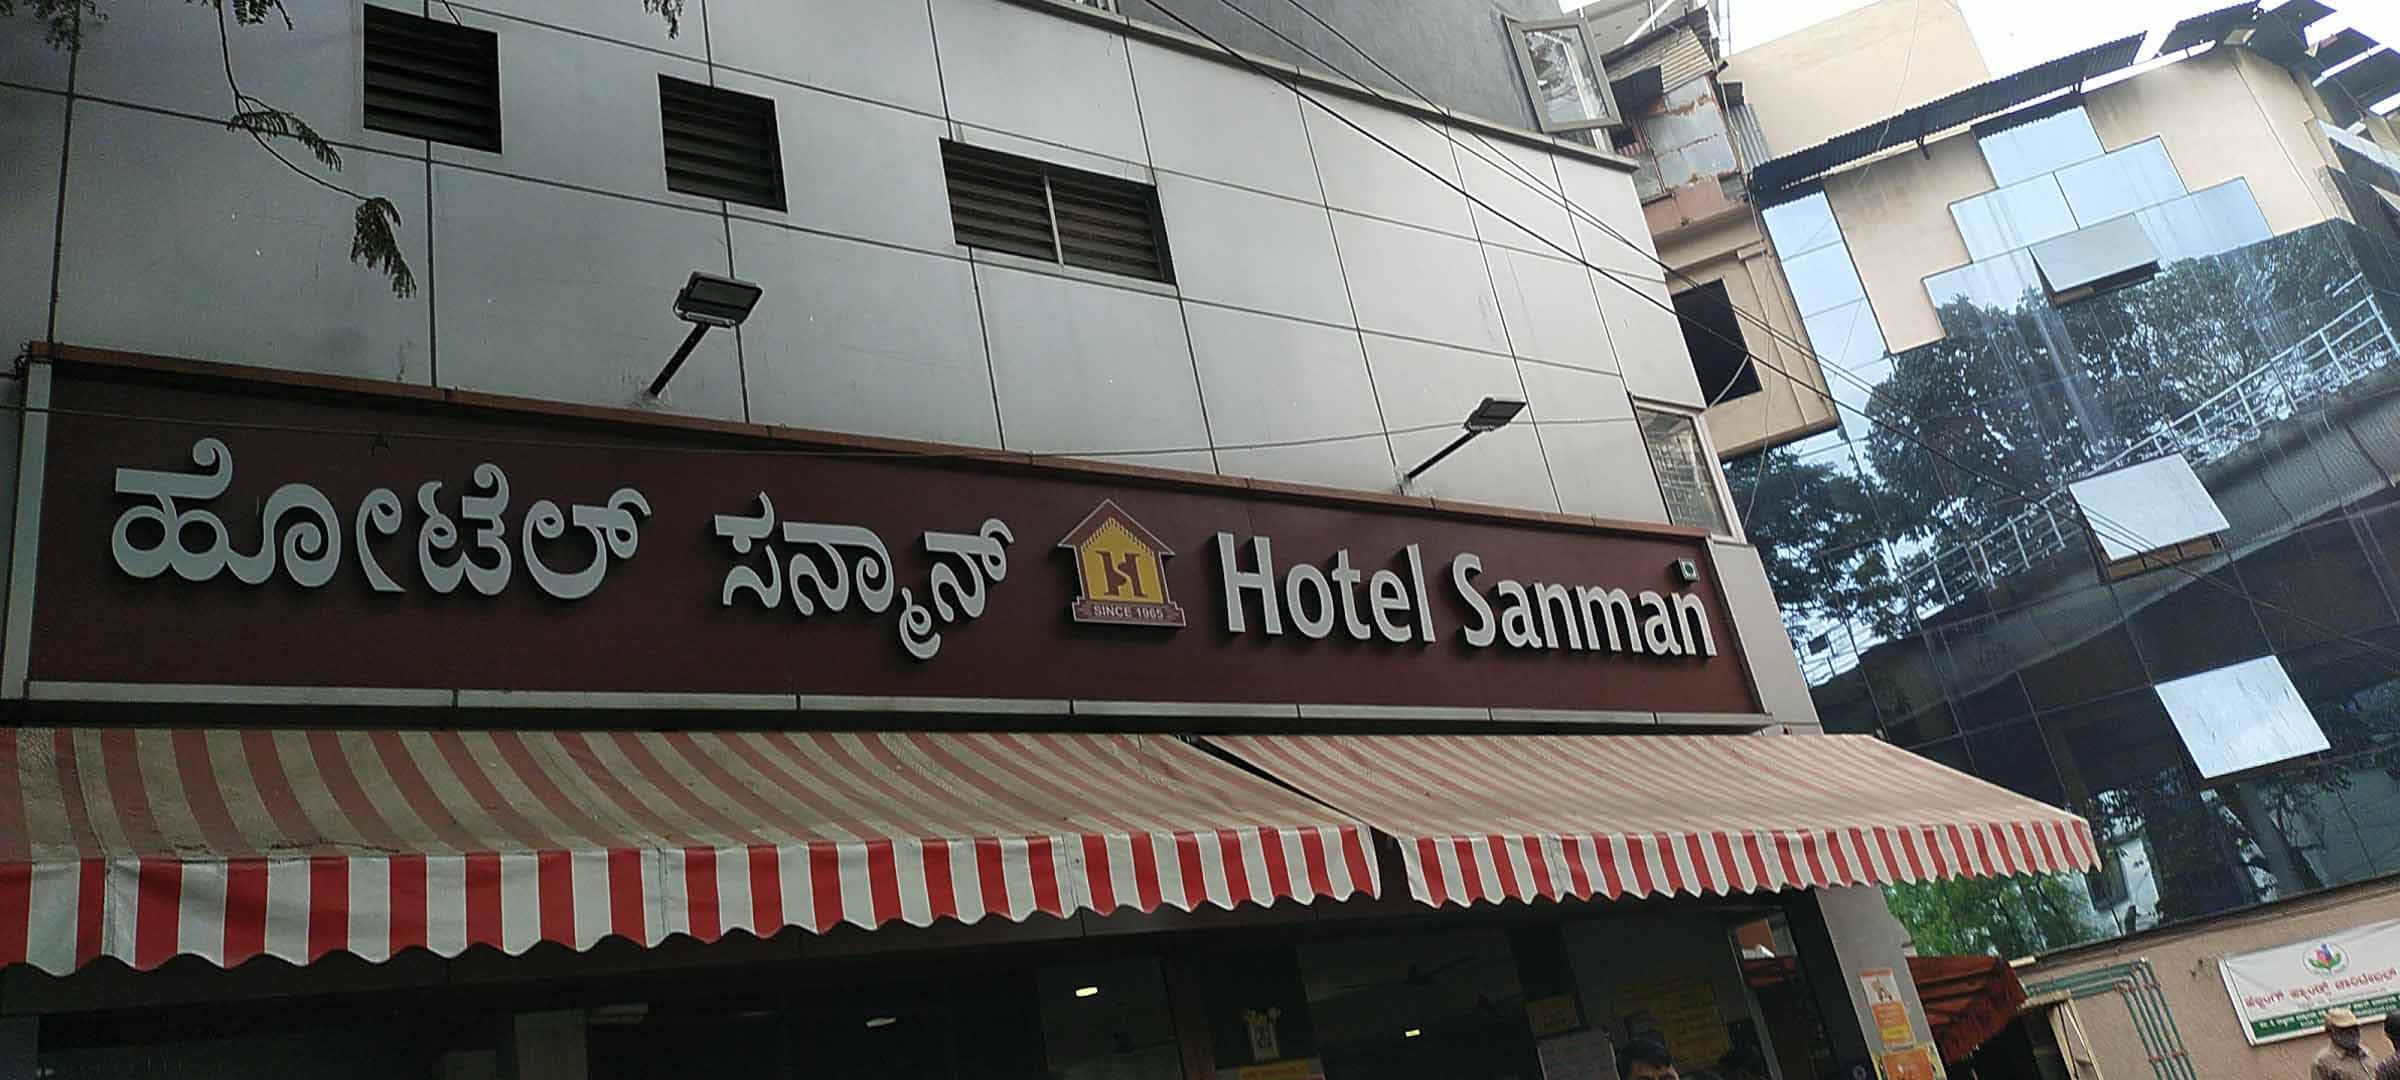 Hotel Sanman, Basavanagudi, Bangalore | Zomato